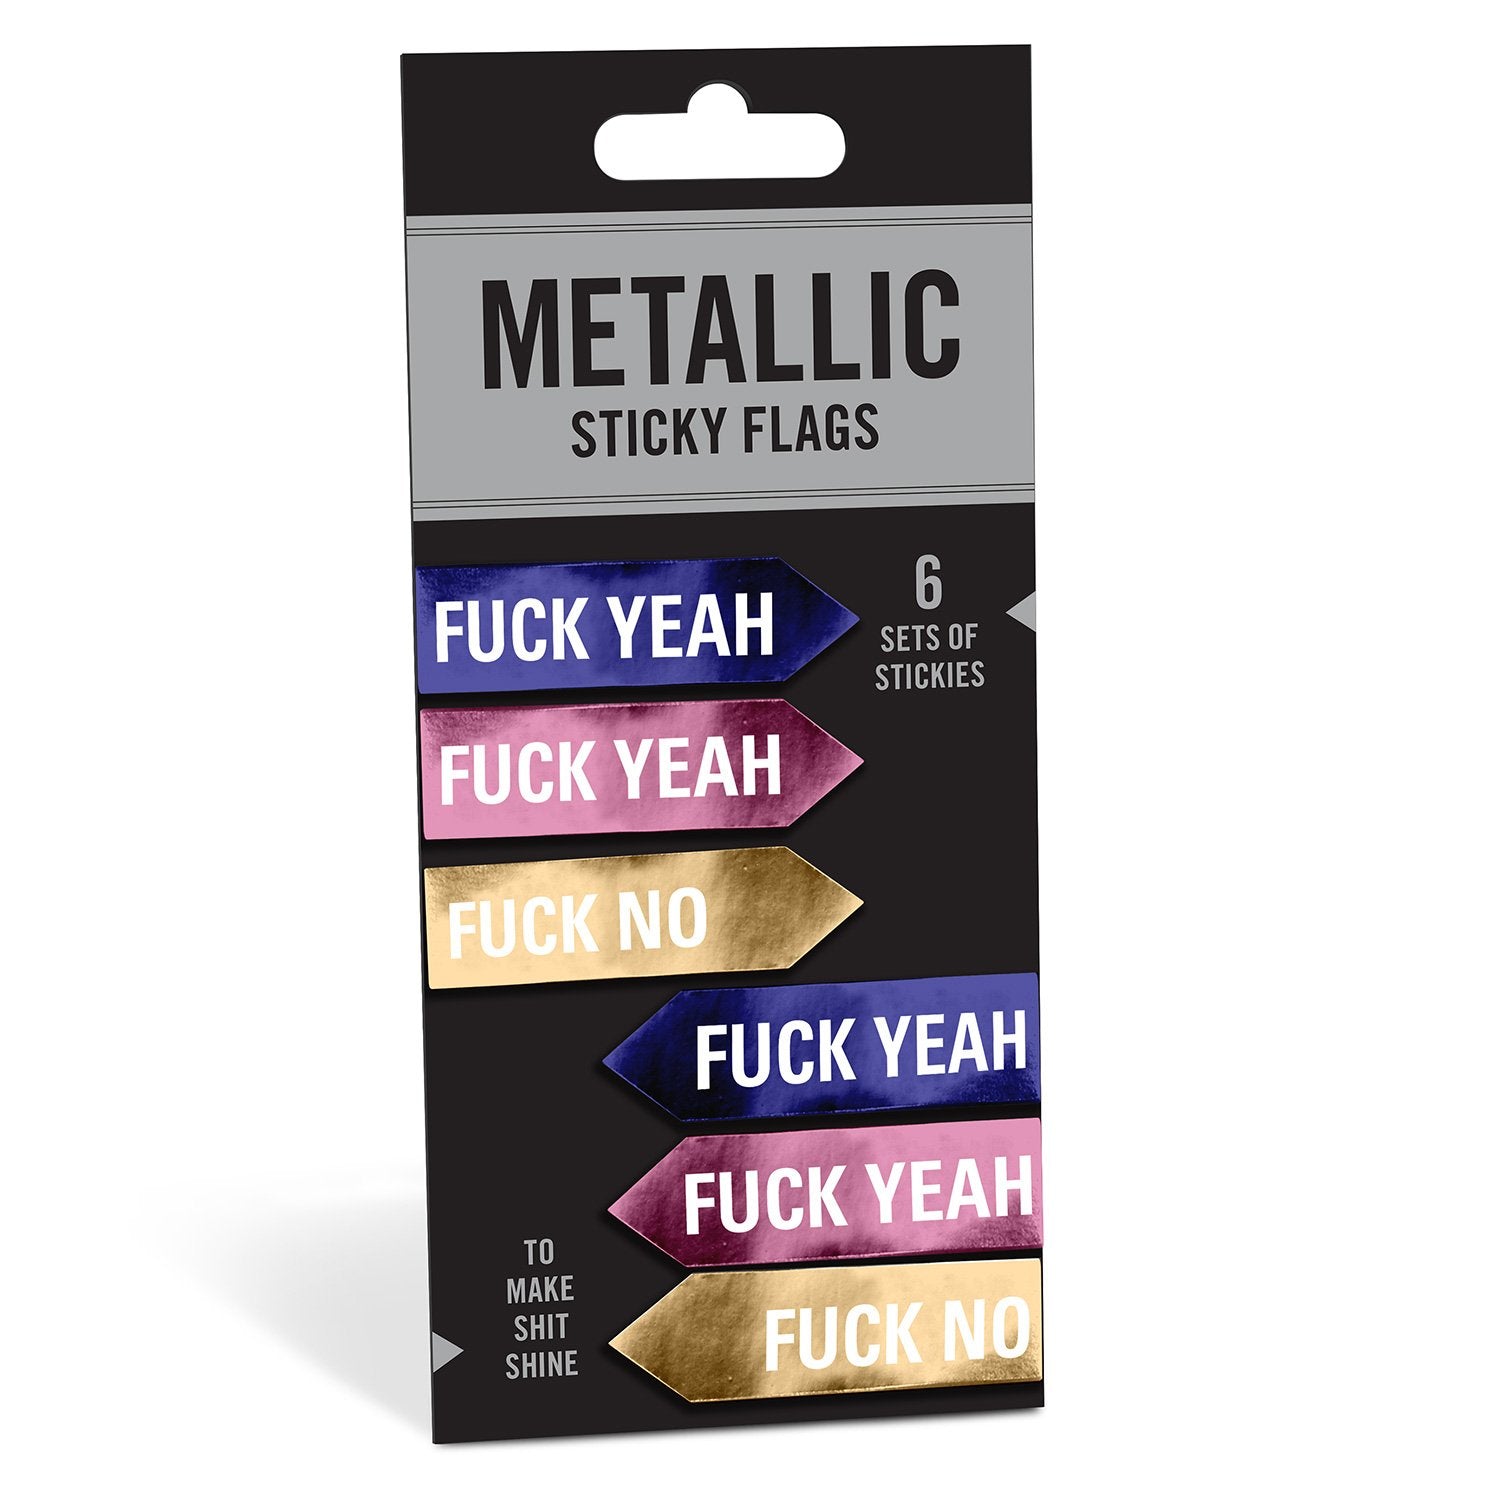 Fuck Yeah - Metallic Sticky Flags